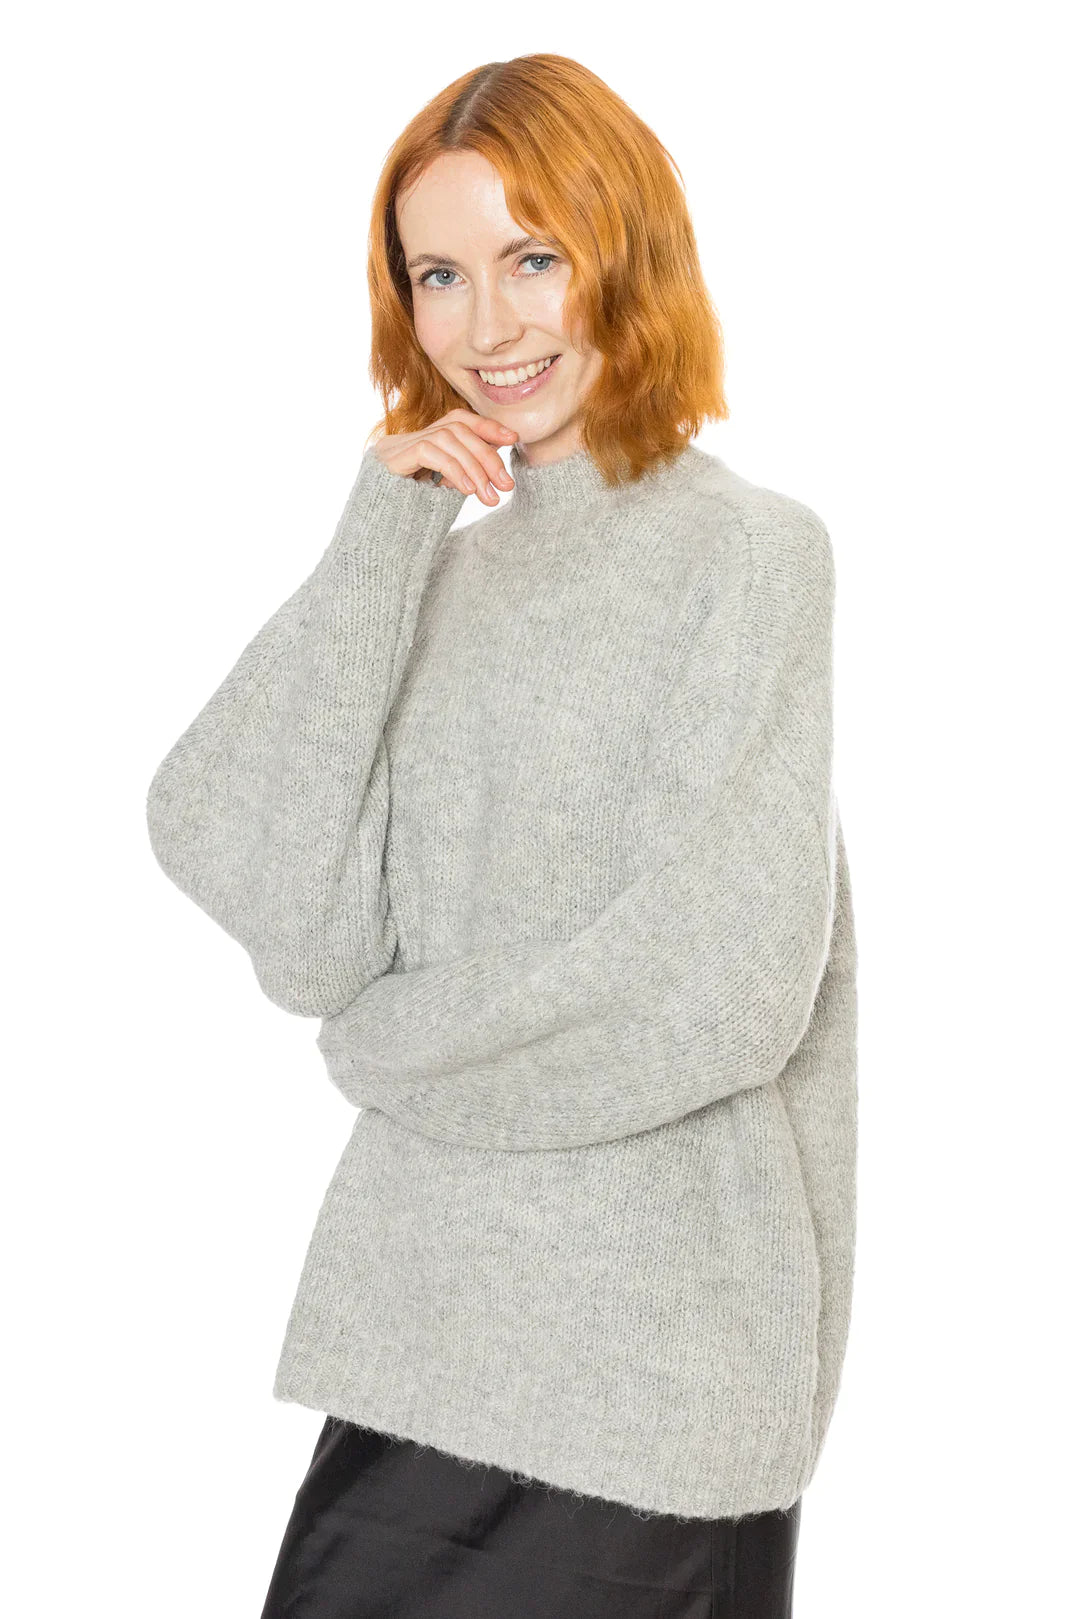 Carlen Sweater